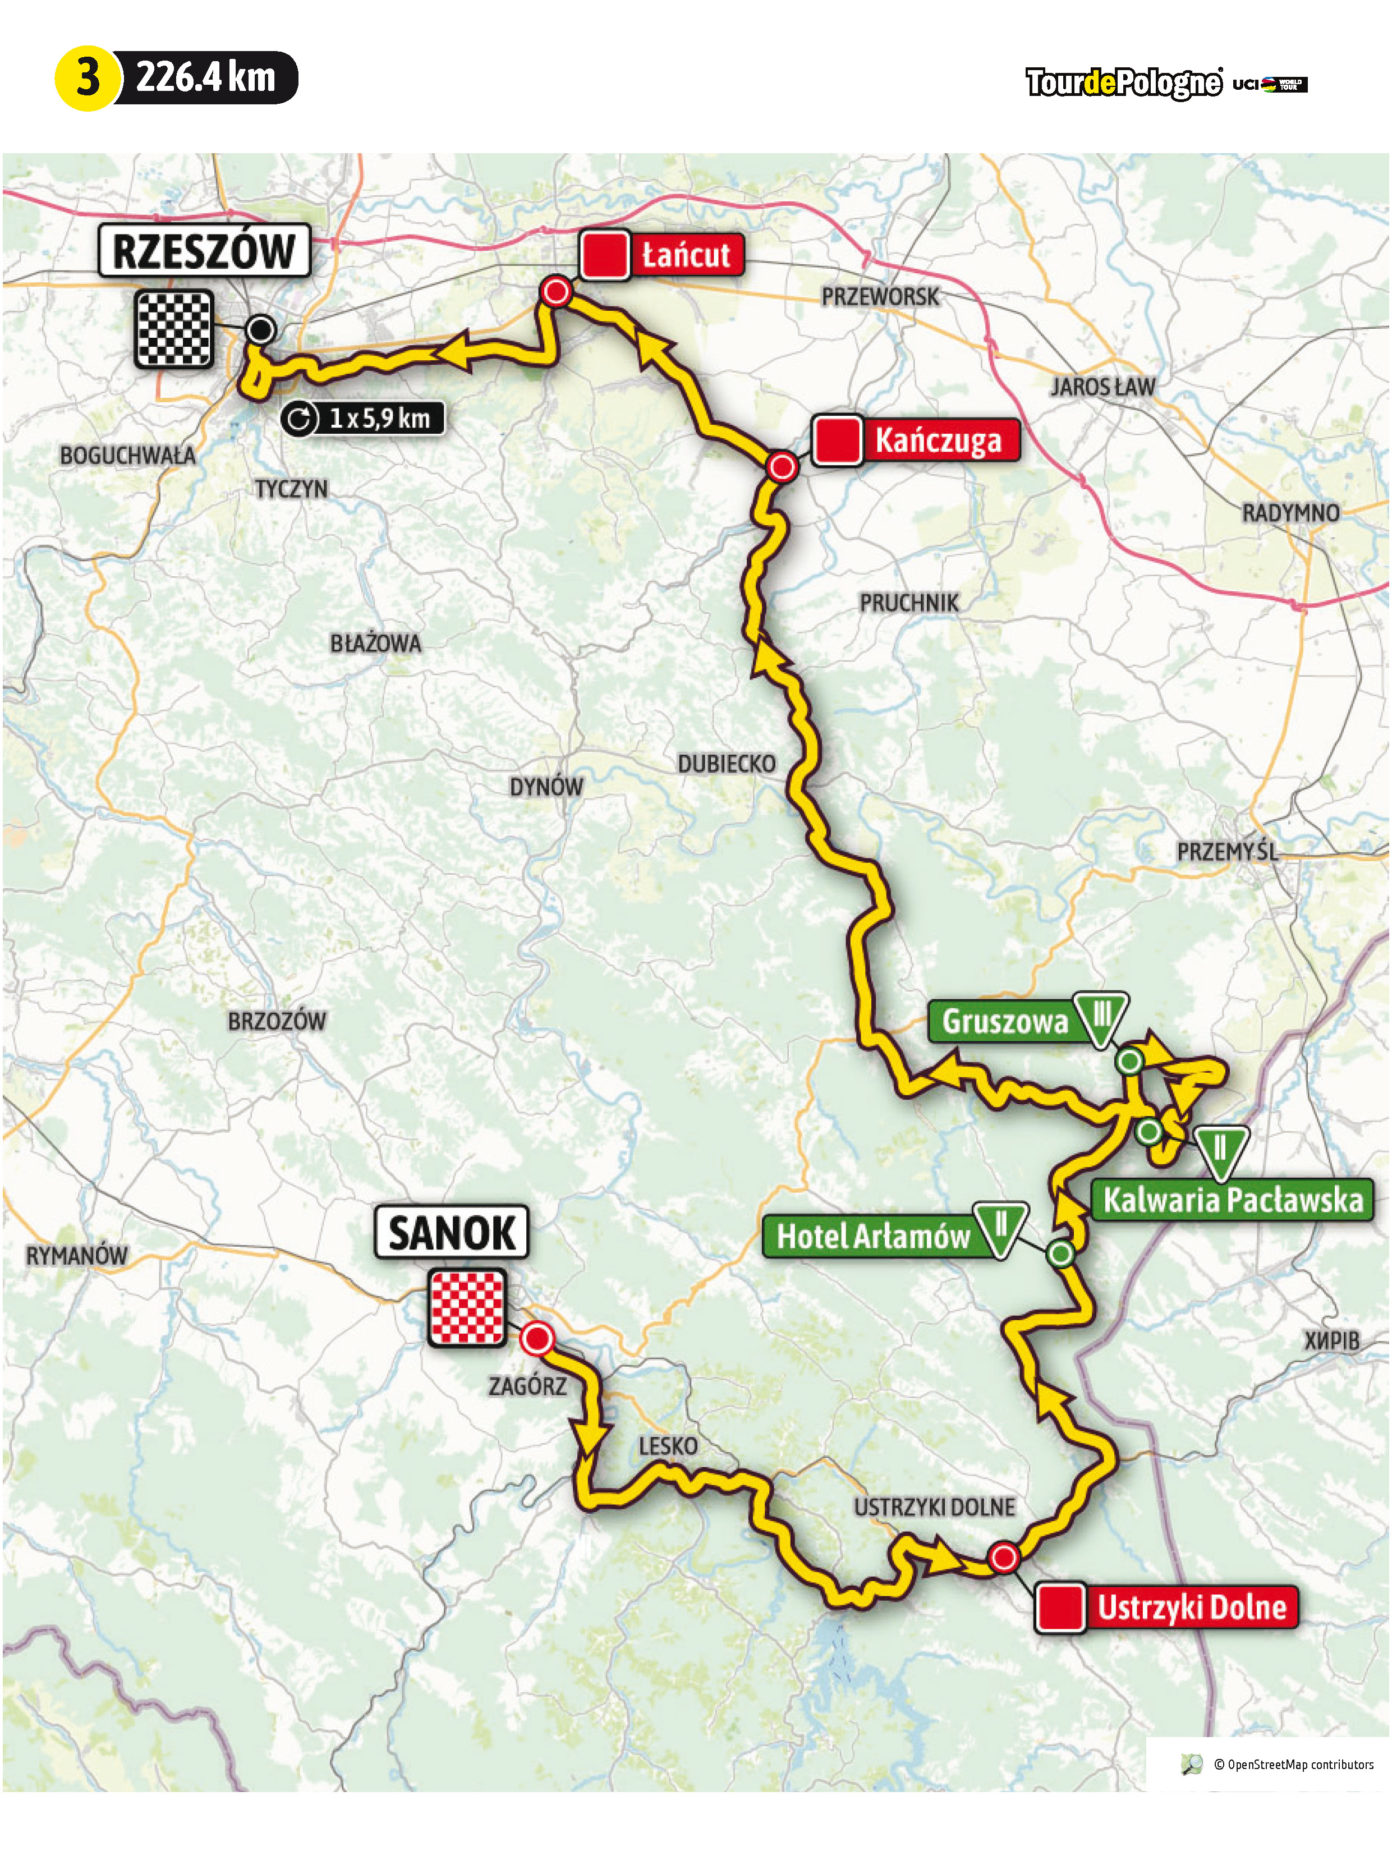 Tour de Pologne 2021 - Mapy, trasa, etapy, profile ...